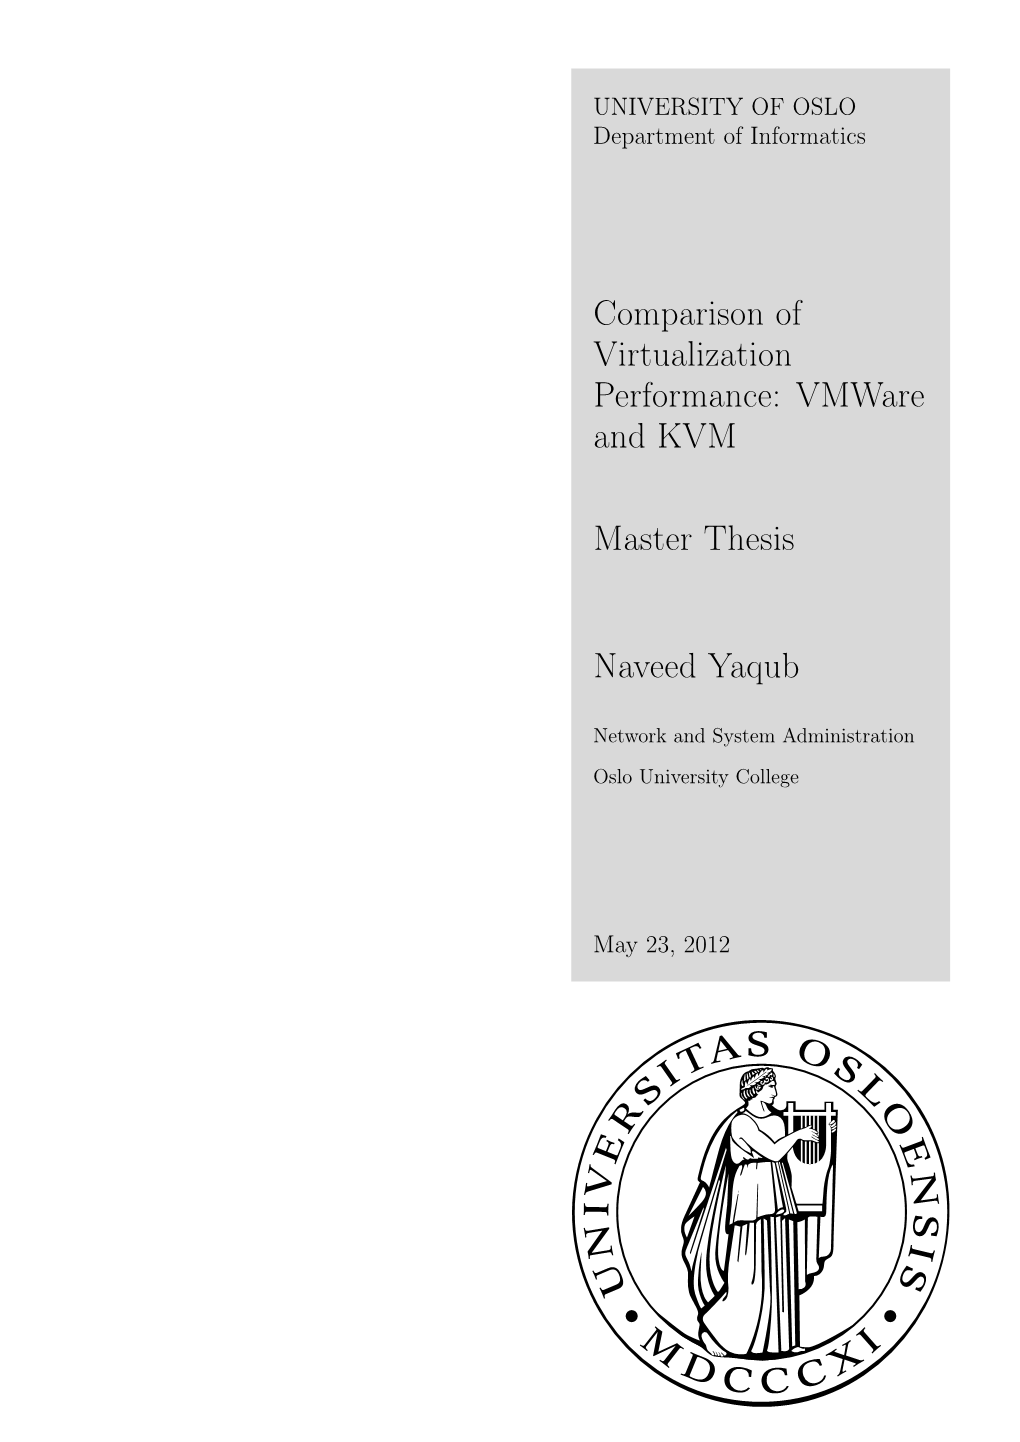 Comparison of Virtualization Performance: Vmware and KVM